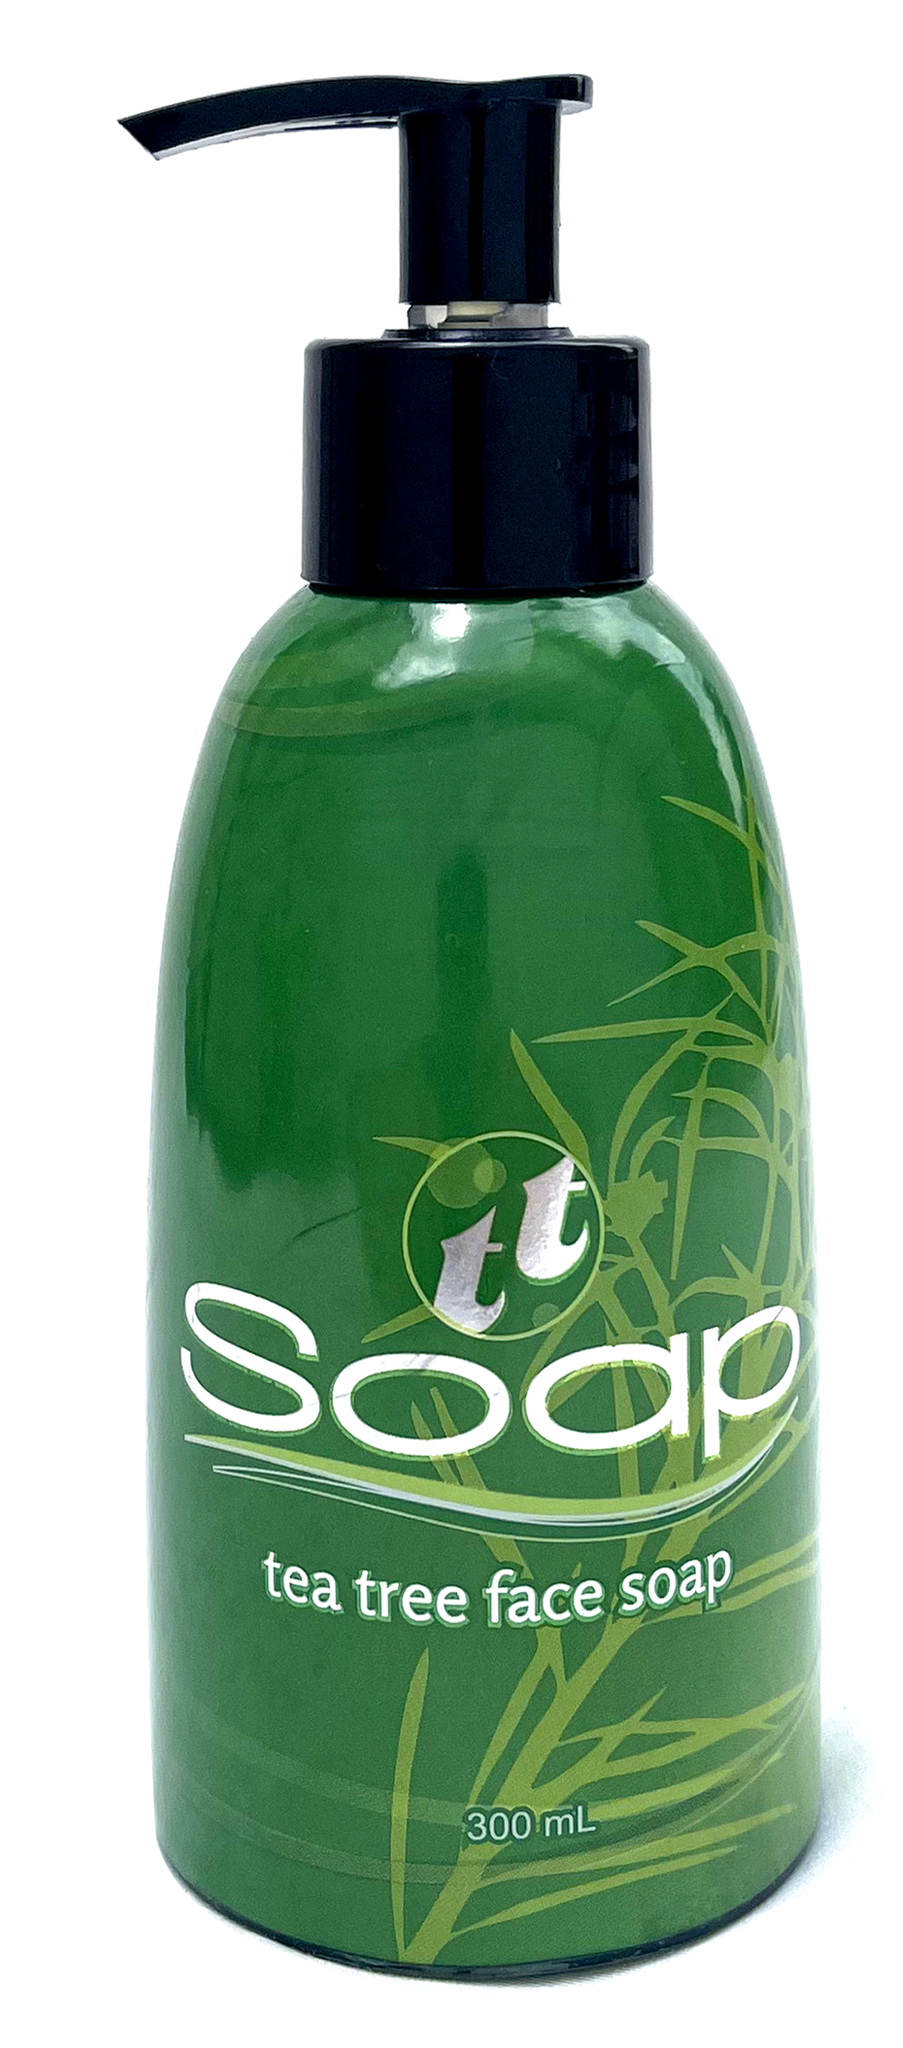 TT – Tea Tree Face Cleaning soap